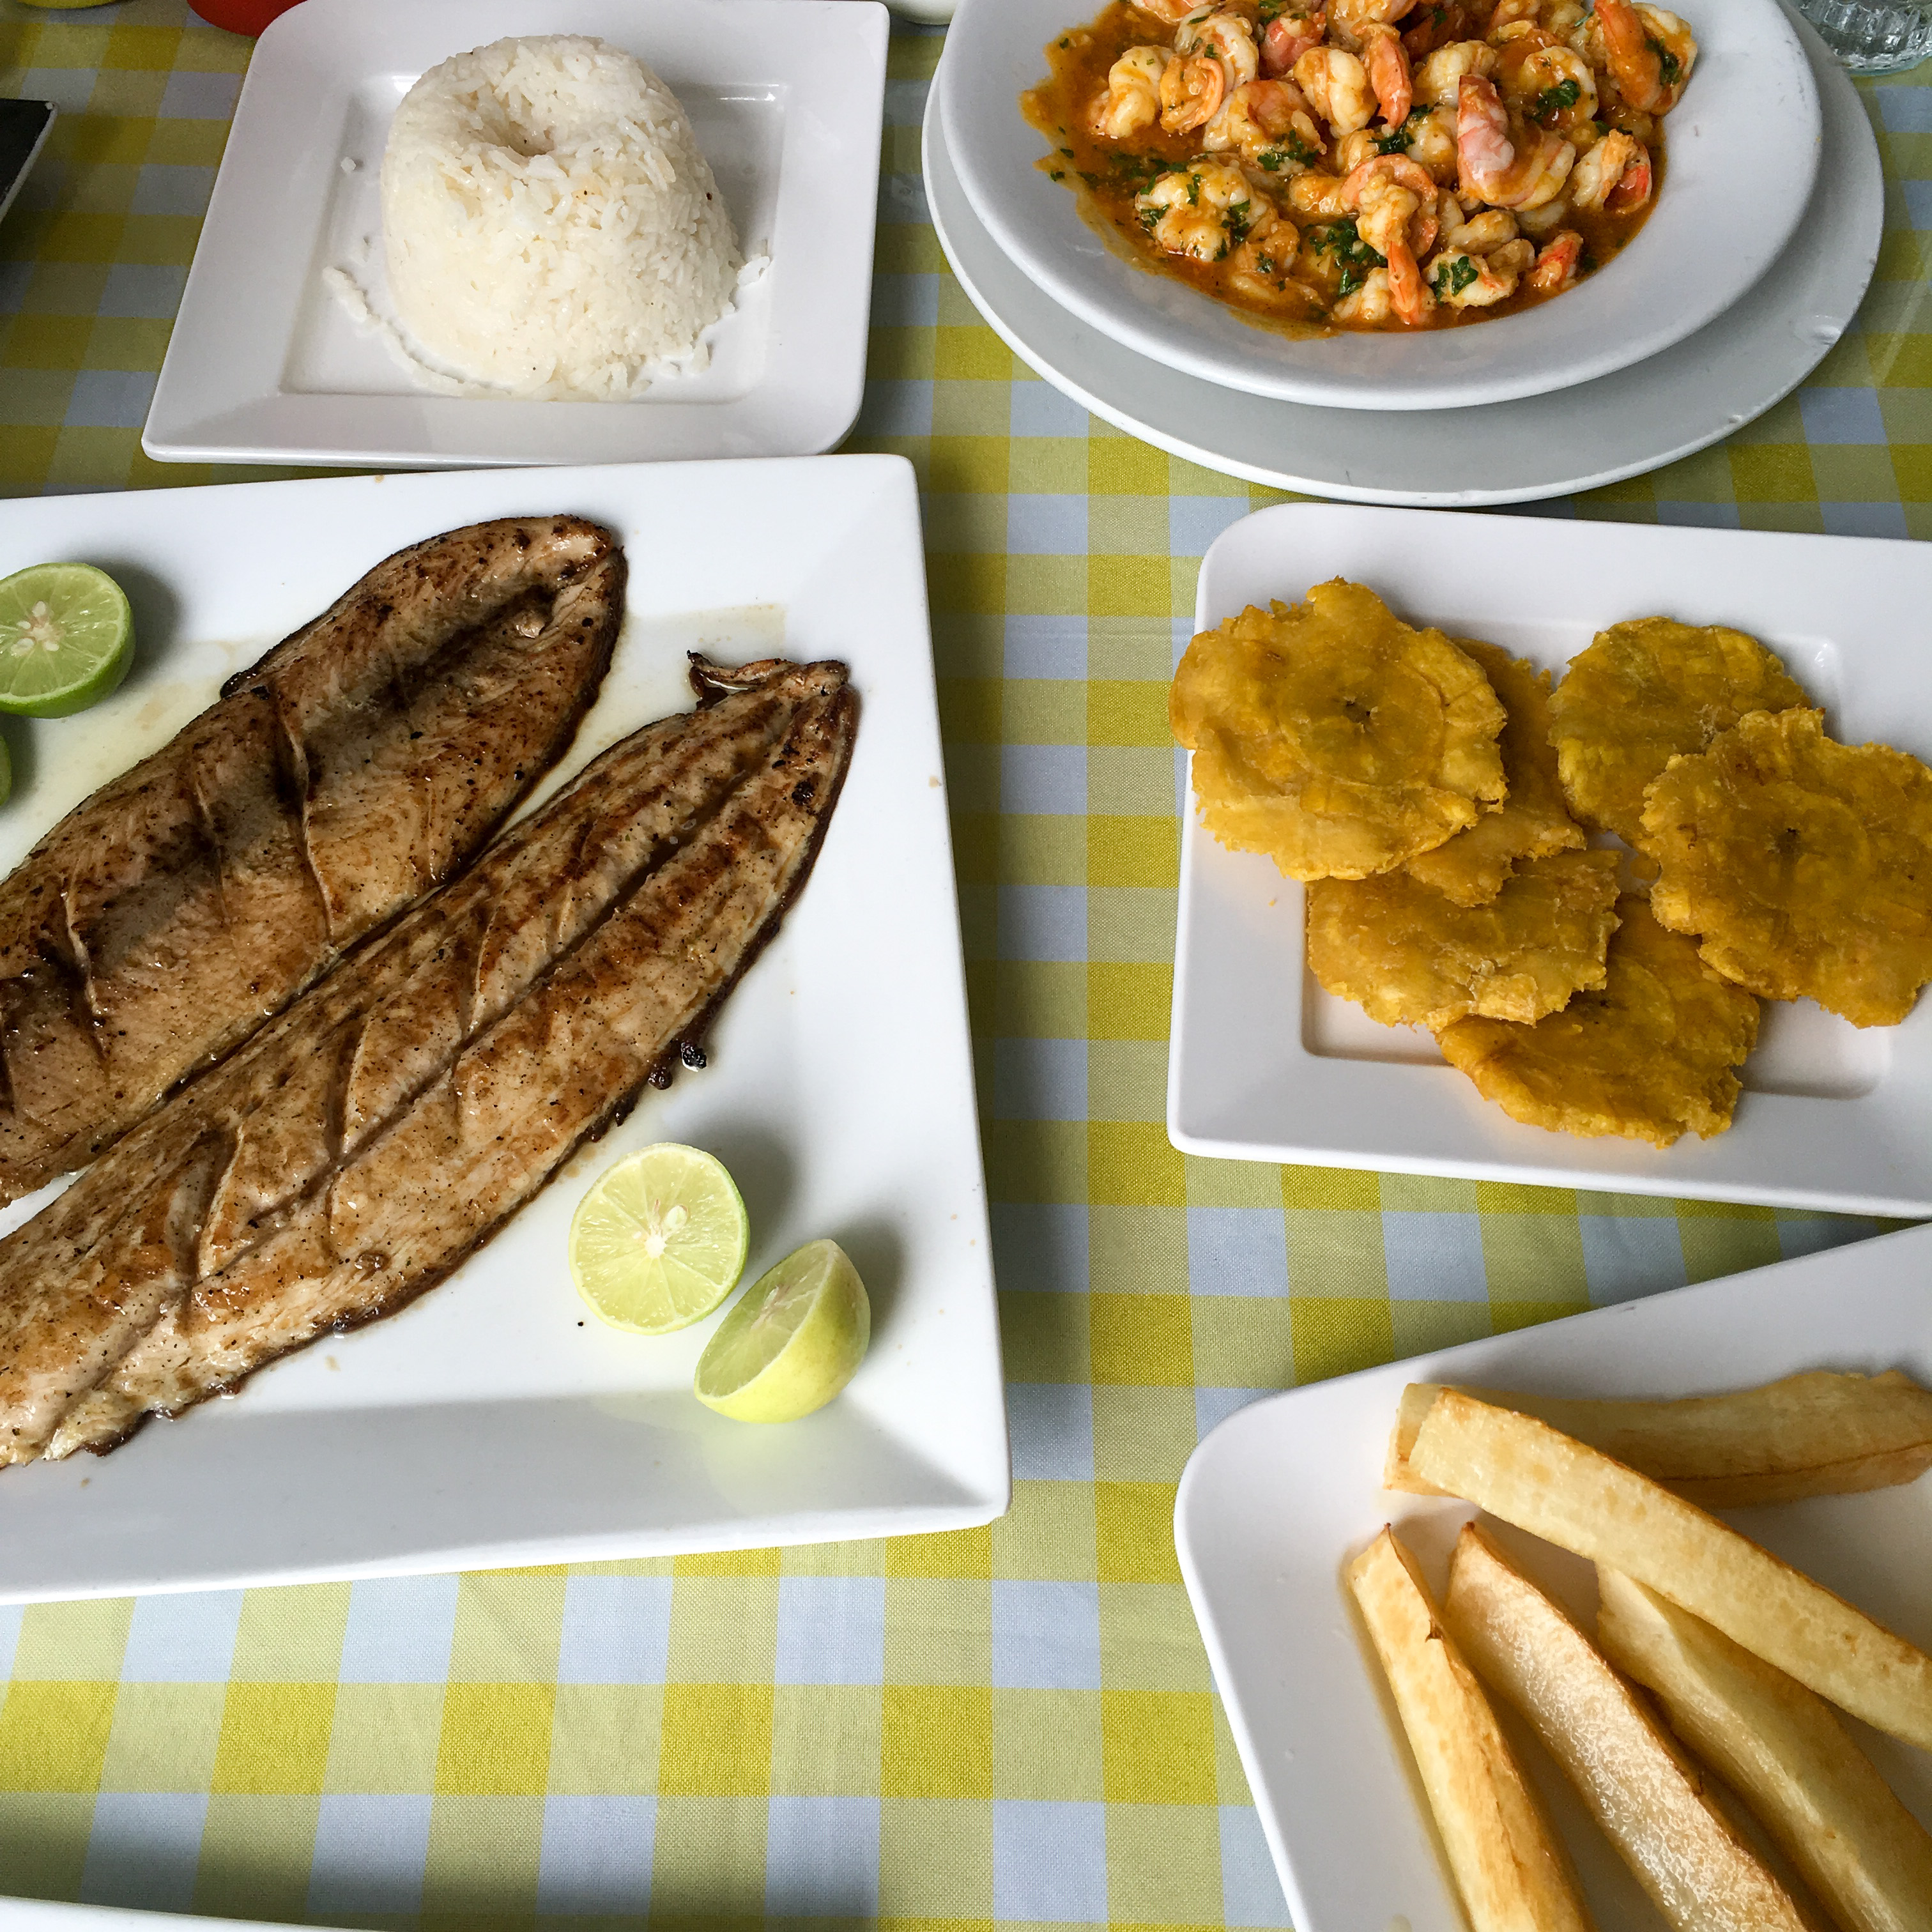 Our Visit to the Panama City Fish Market - Panama, City - https://thegiftedgabber.com/